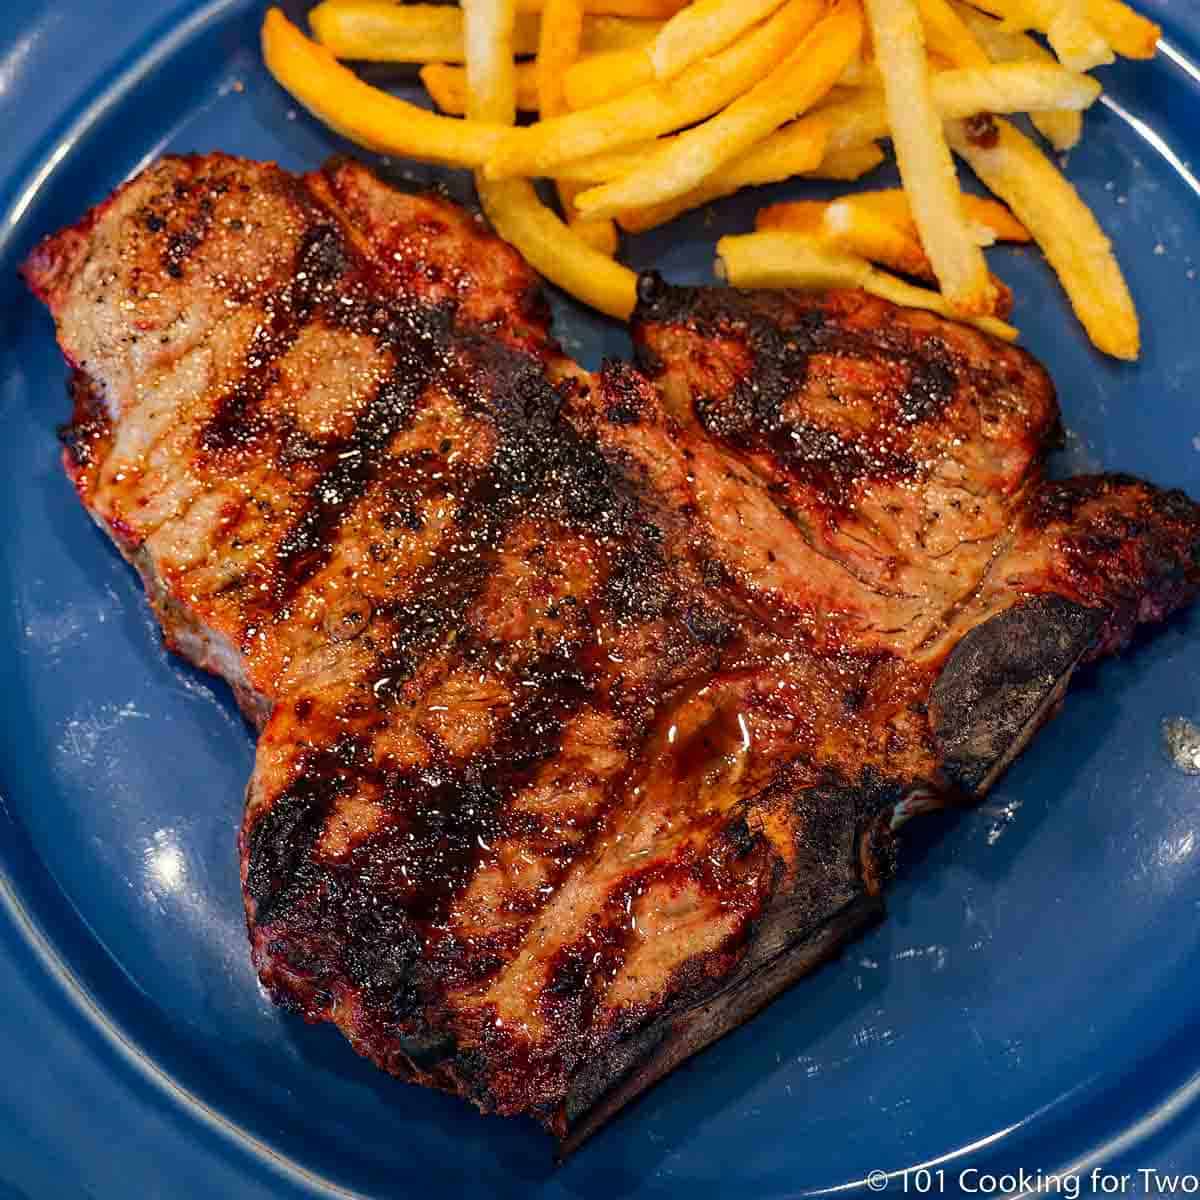 porterhouse steak with fries on blue plate.